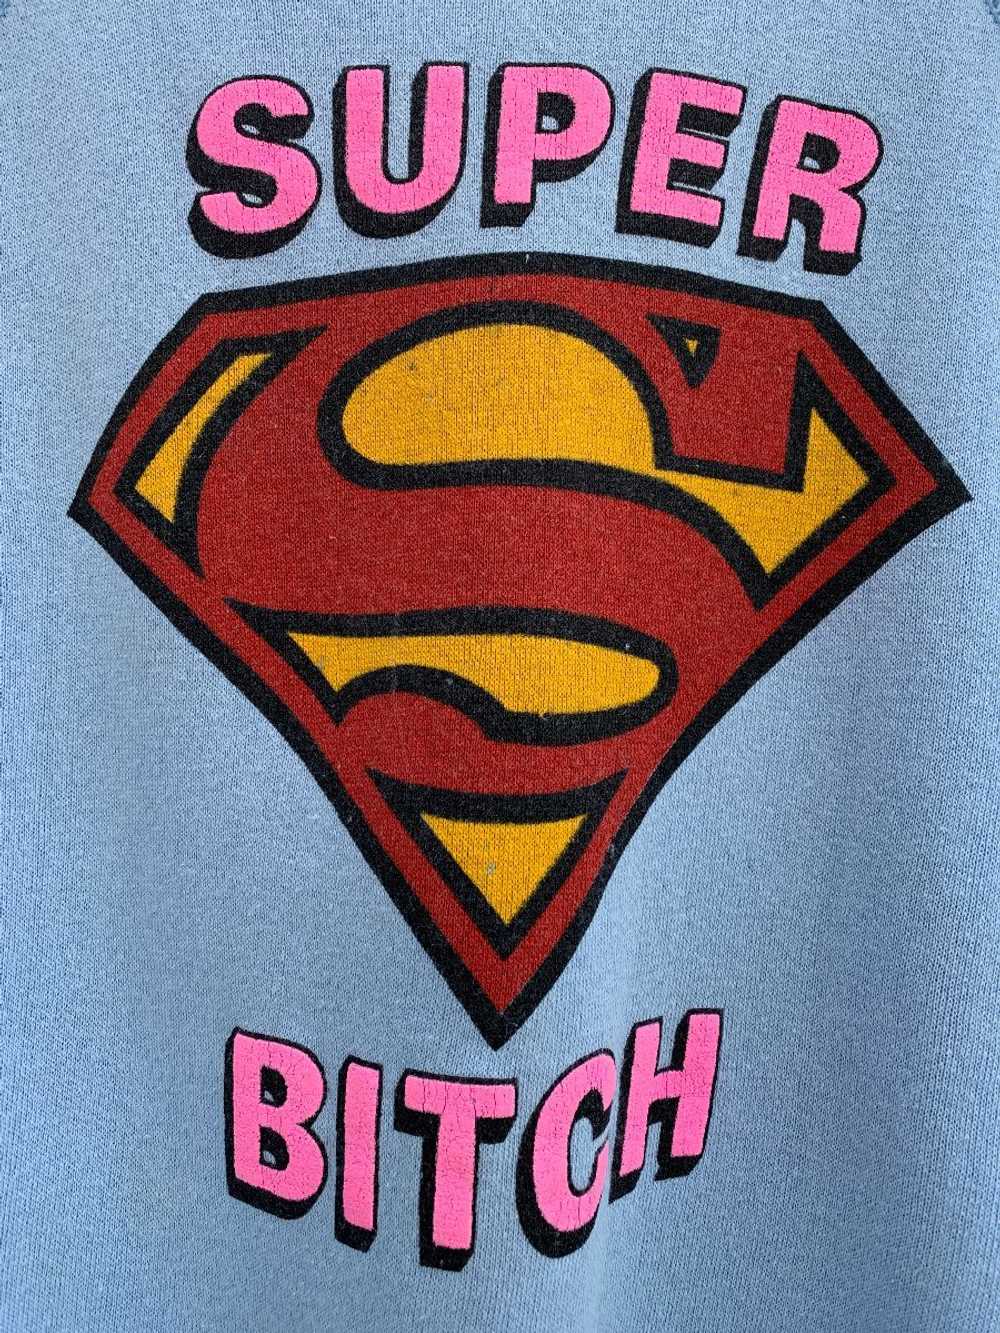 SUPERMAN SUPER BITCH CREWNECK SWEATSHIRT AS-IS - image 2